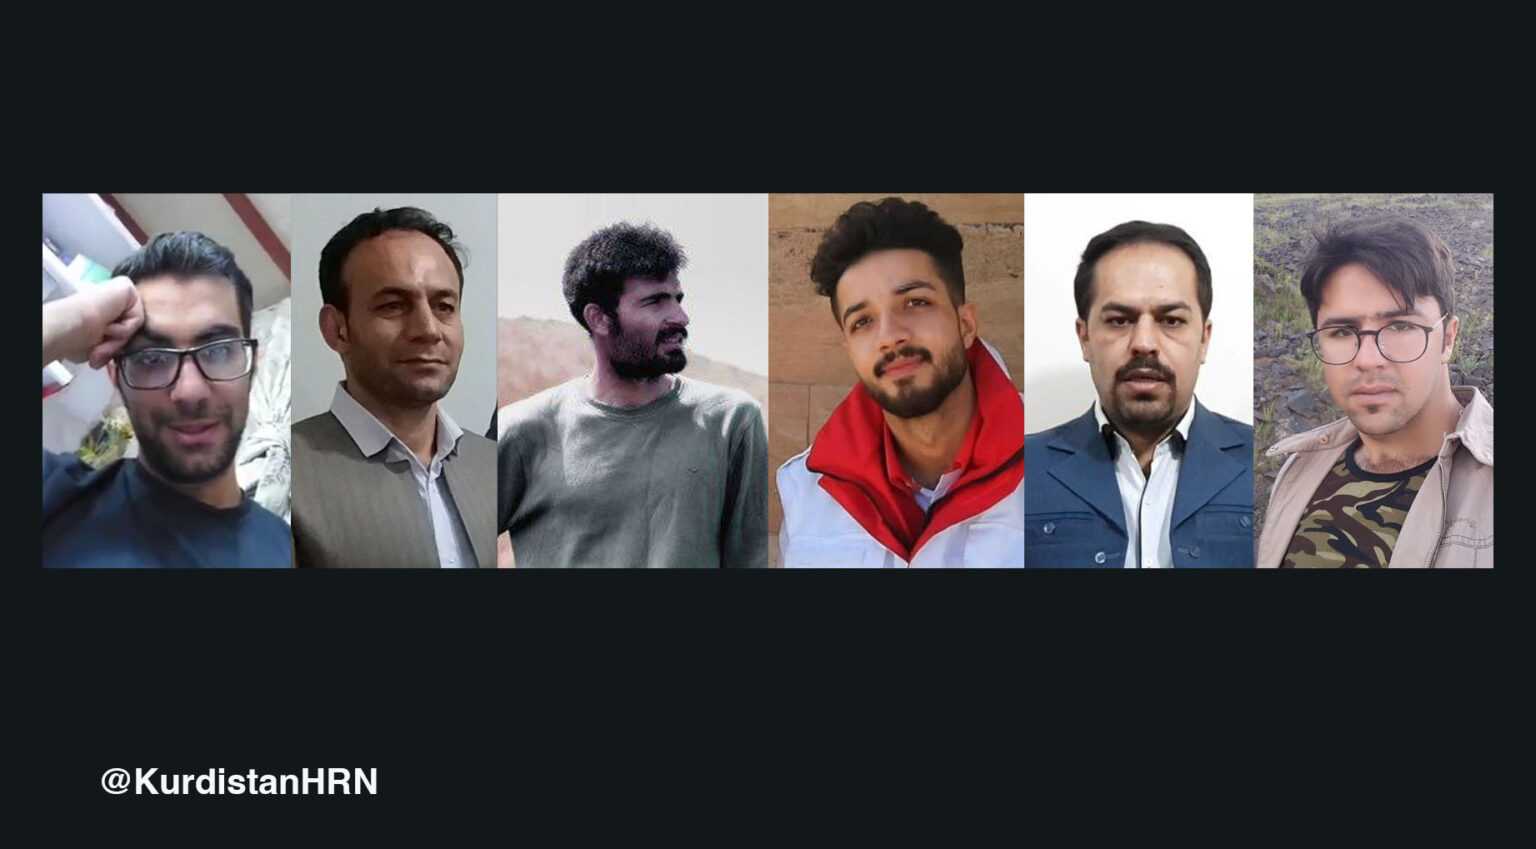 Yasin Fathi, Sirous Abbasi, Mohammad Javaheri, Masoud Kamyab, Azad Abbasi, Mehdi Javanmardi